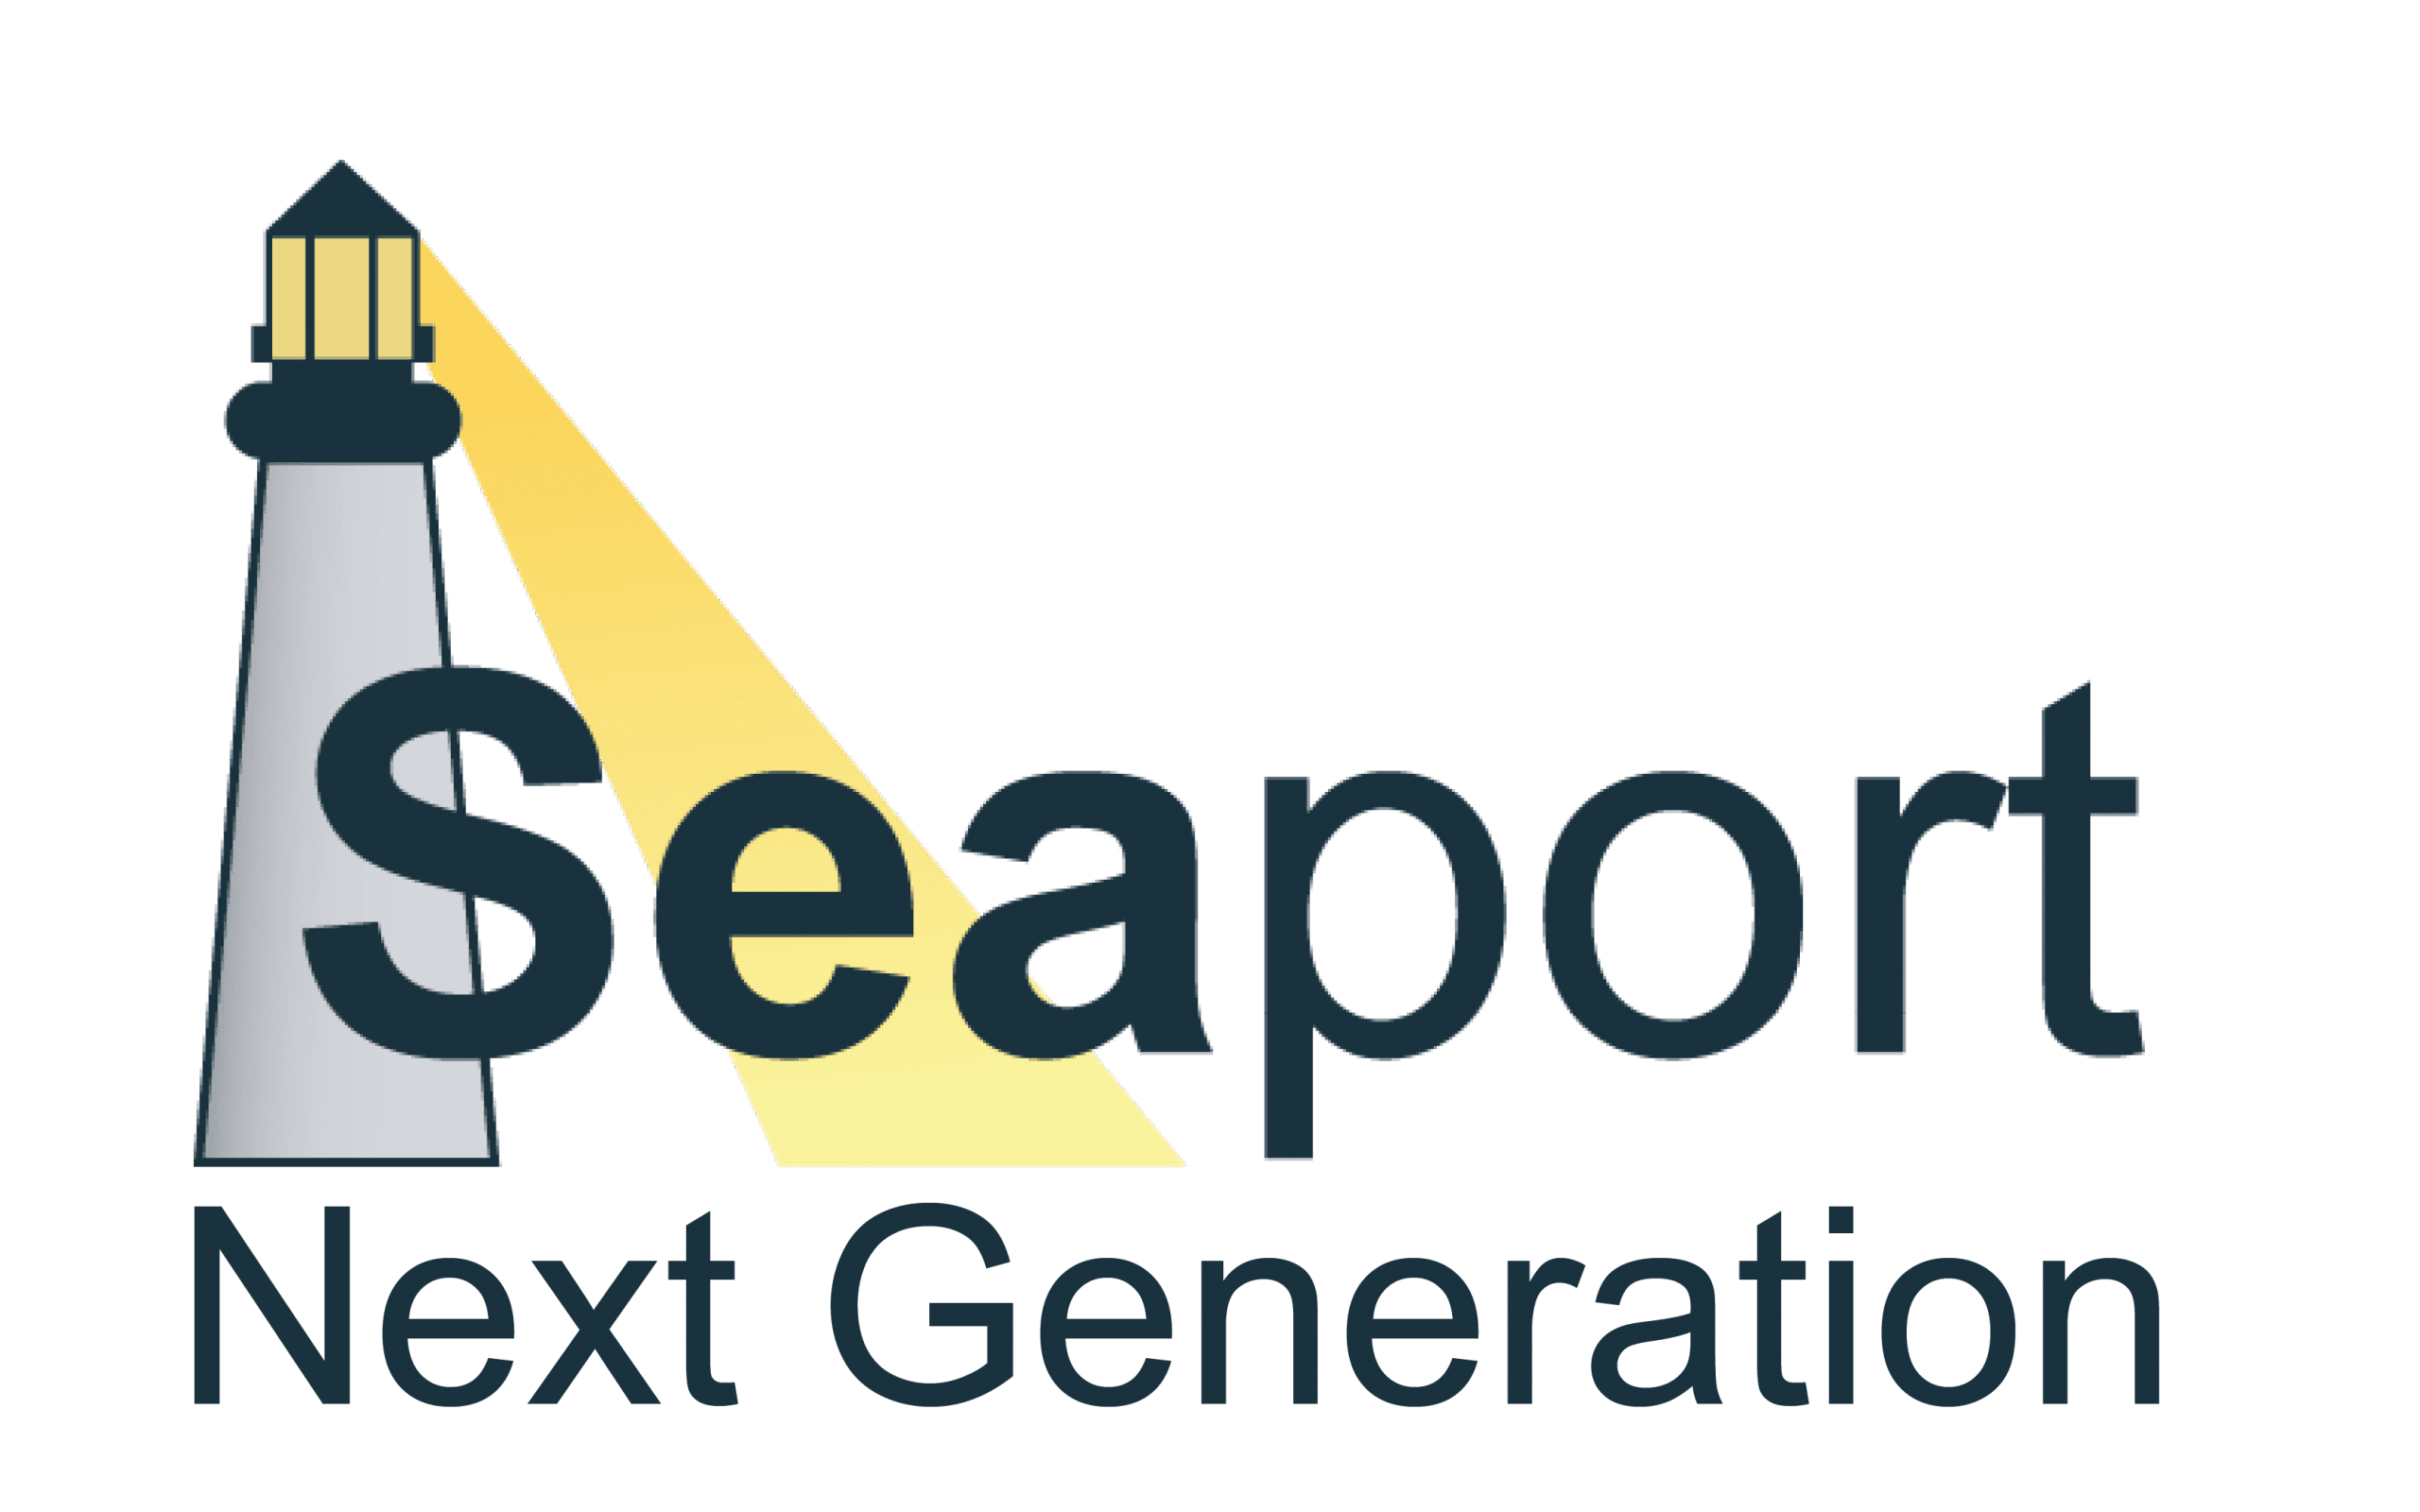 Seaport Next Generation Logo